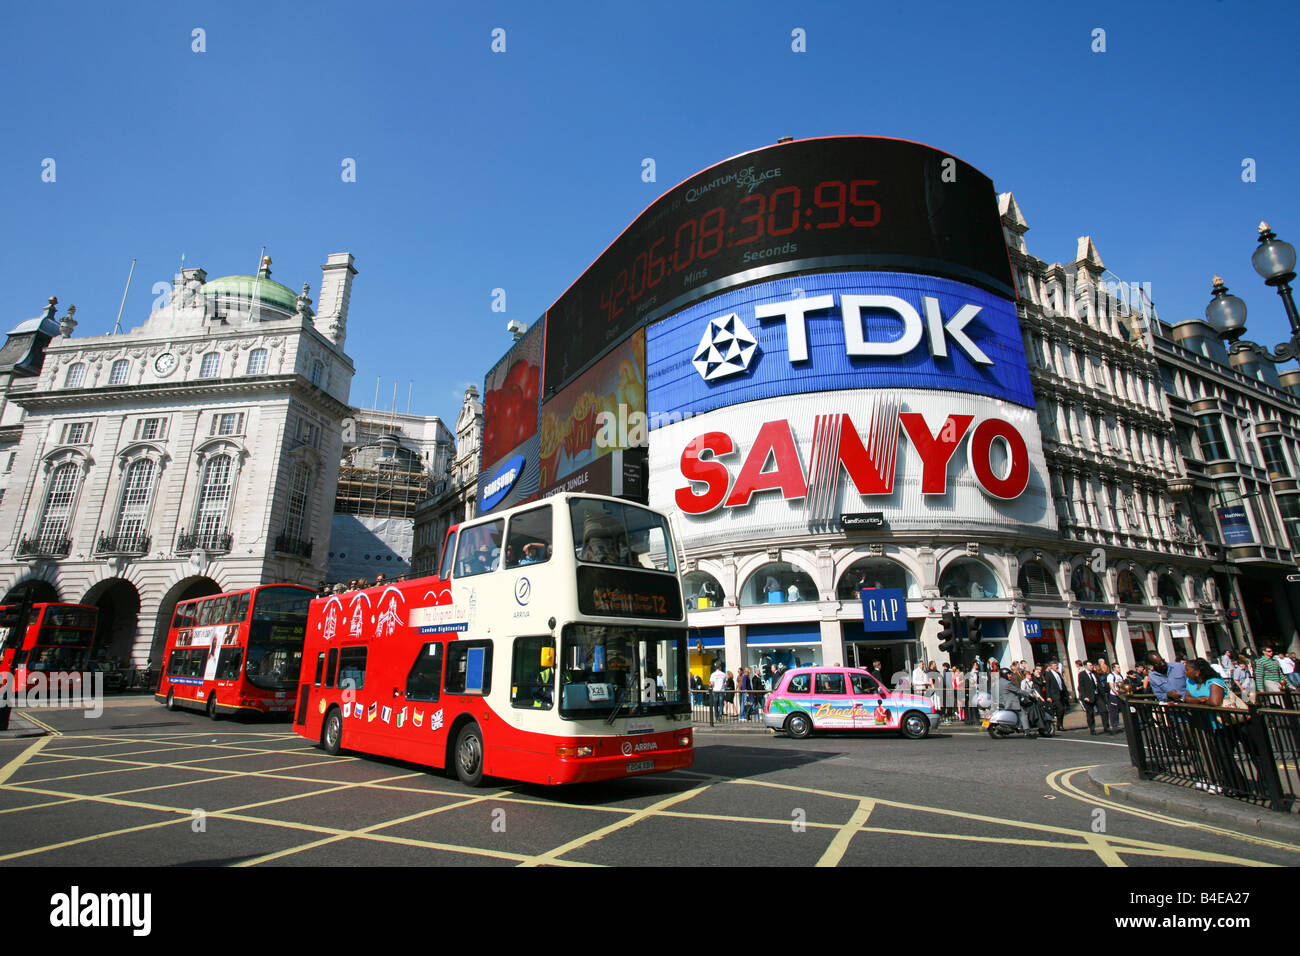 Rote offene Top Londoner Doppeldecker-Sightseeing-Sightseeing-Bus vor berühmten Neon geht Schilder in Piccadilly Circus London UK Stockfoto